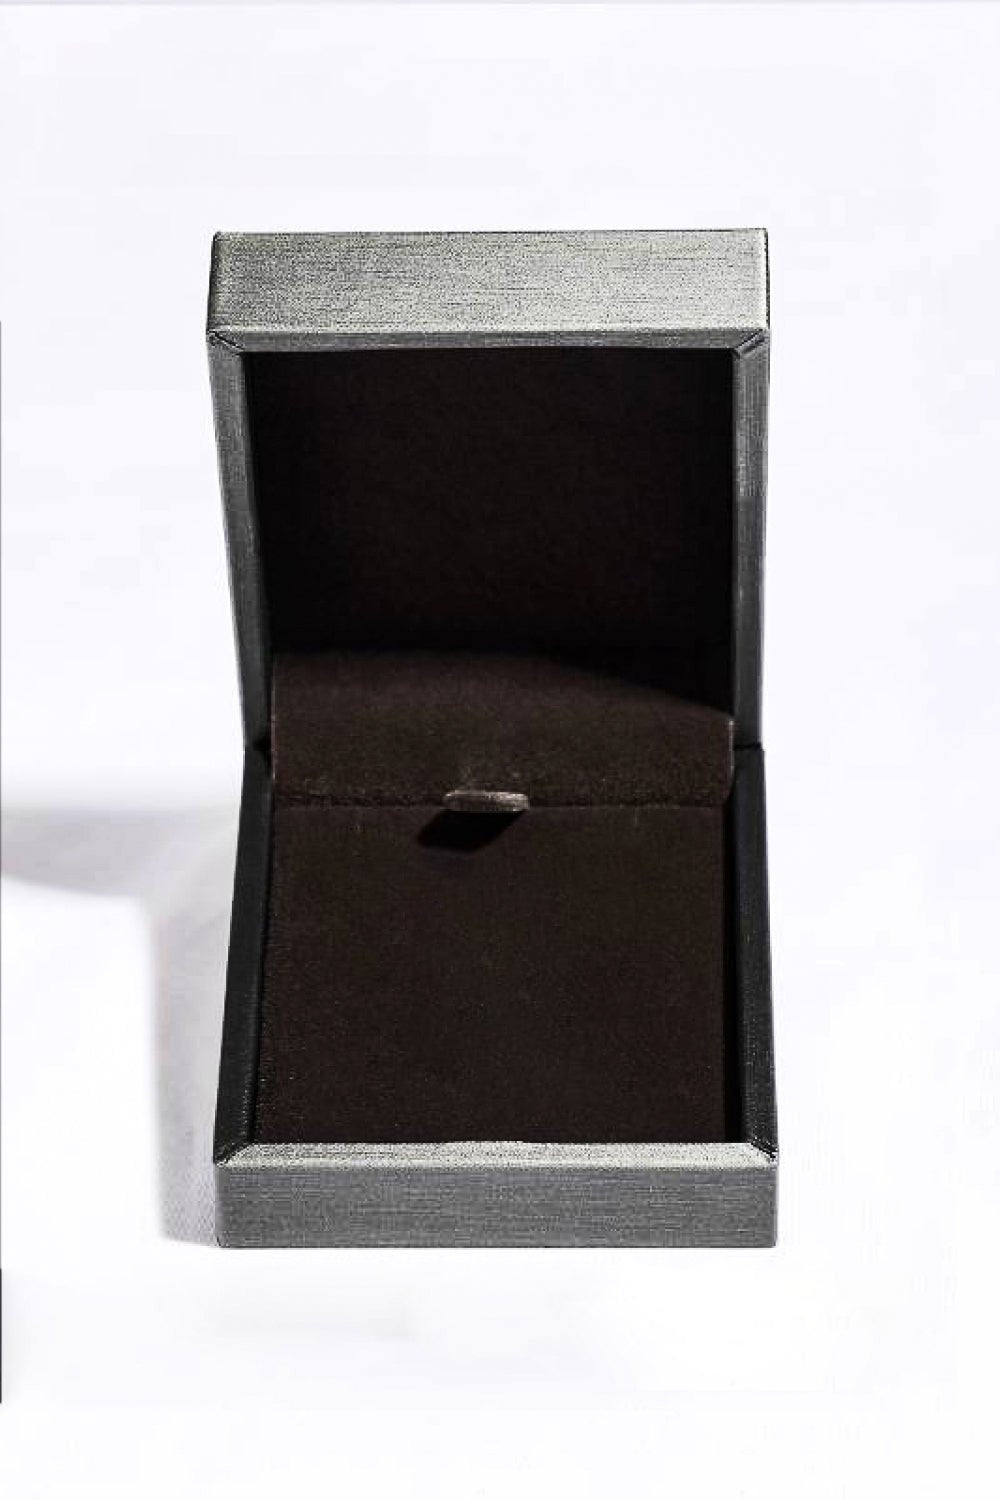 1 Carat Moissanite Open Ring Pendant Necklace - Uylee's Boutique